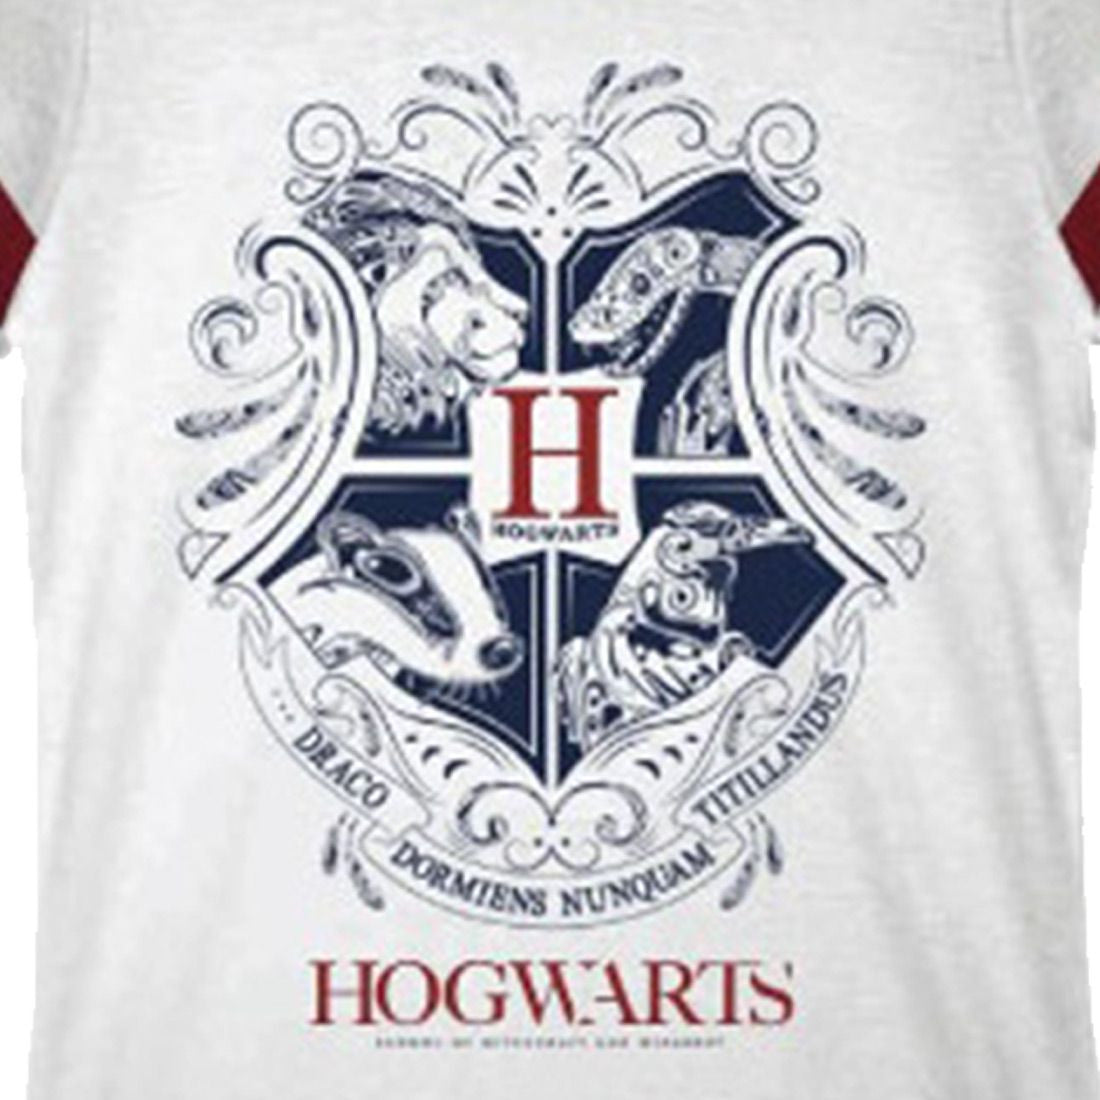 T-shirt Femme Harry Potter - Hogwarts Emblem